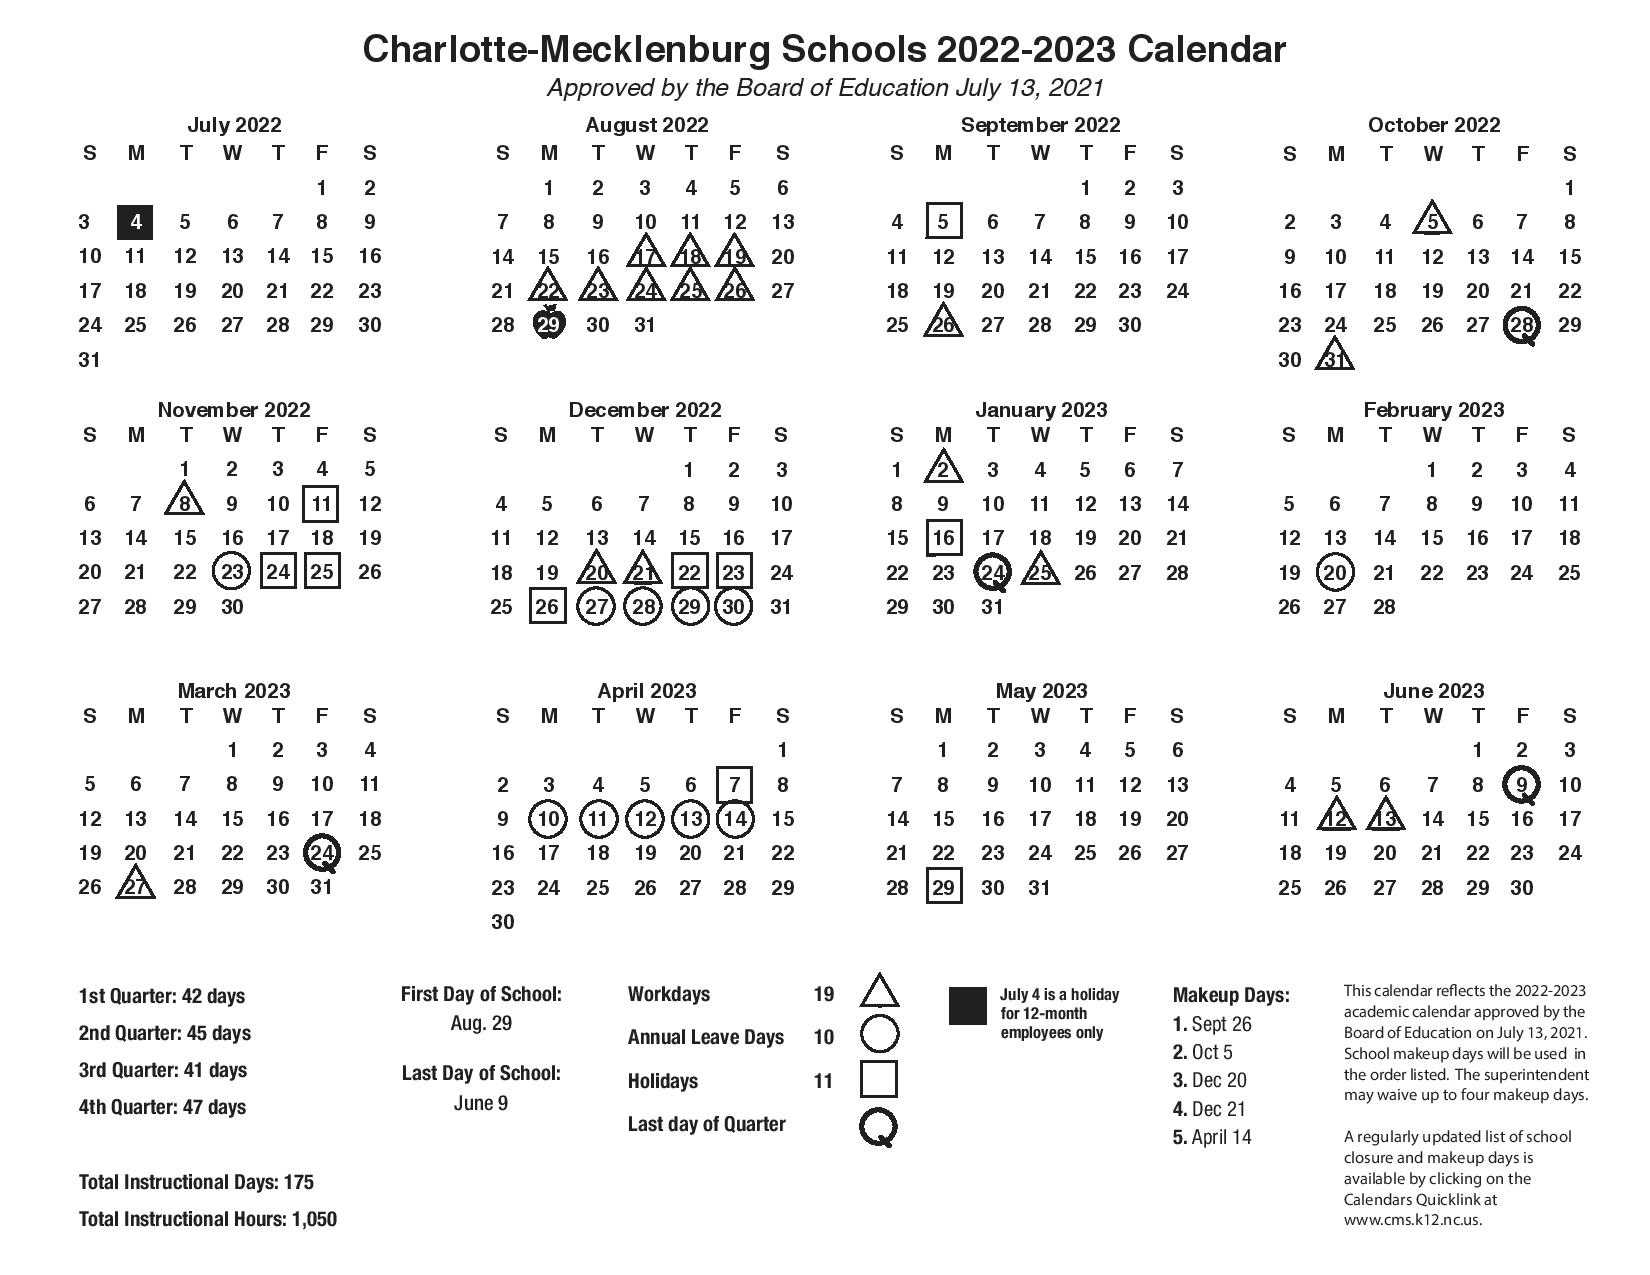 Cmsd Calendar 2022 23 Cms Schools Calendar 2022-2023 (Charlotte-Mecklenburg Schools)